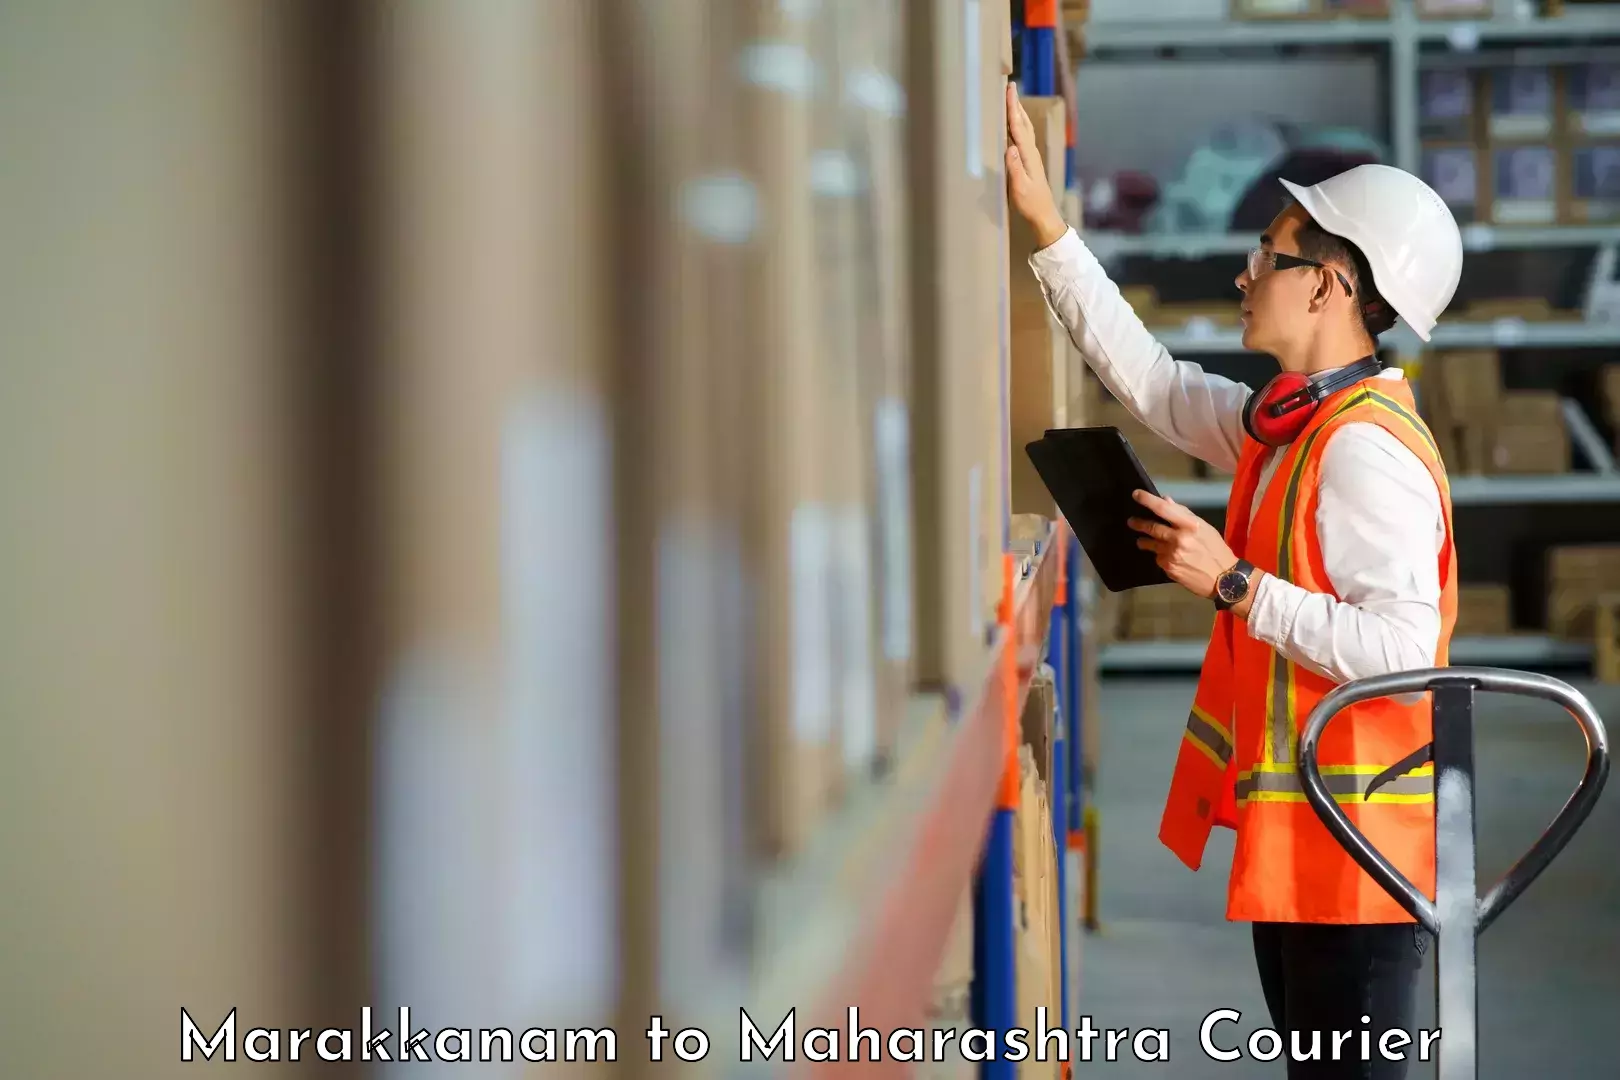 Urban courier service Marakkanam to Vita